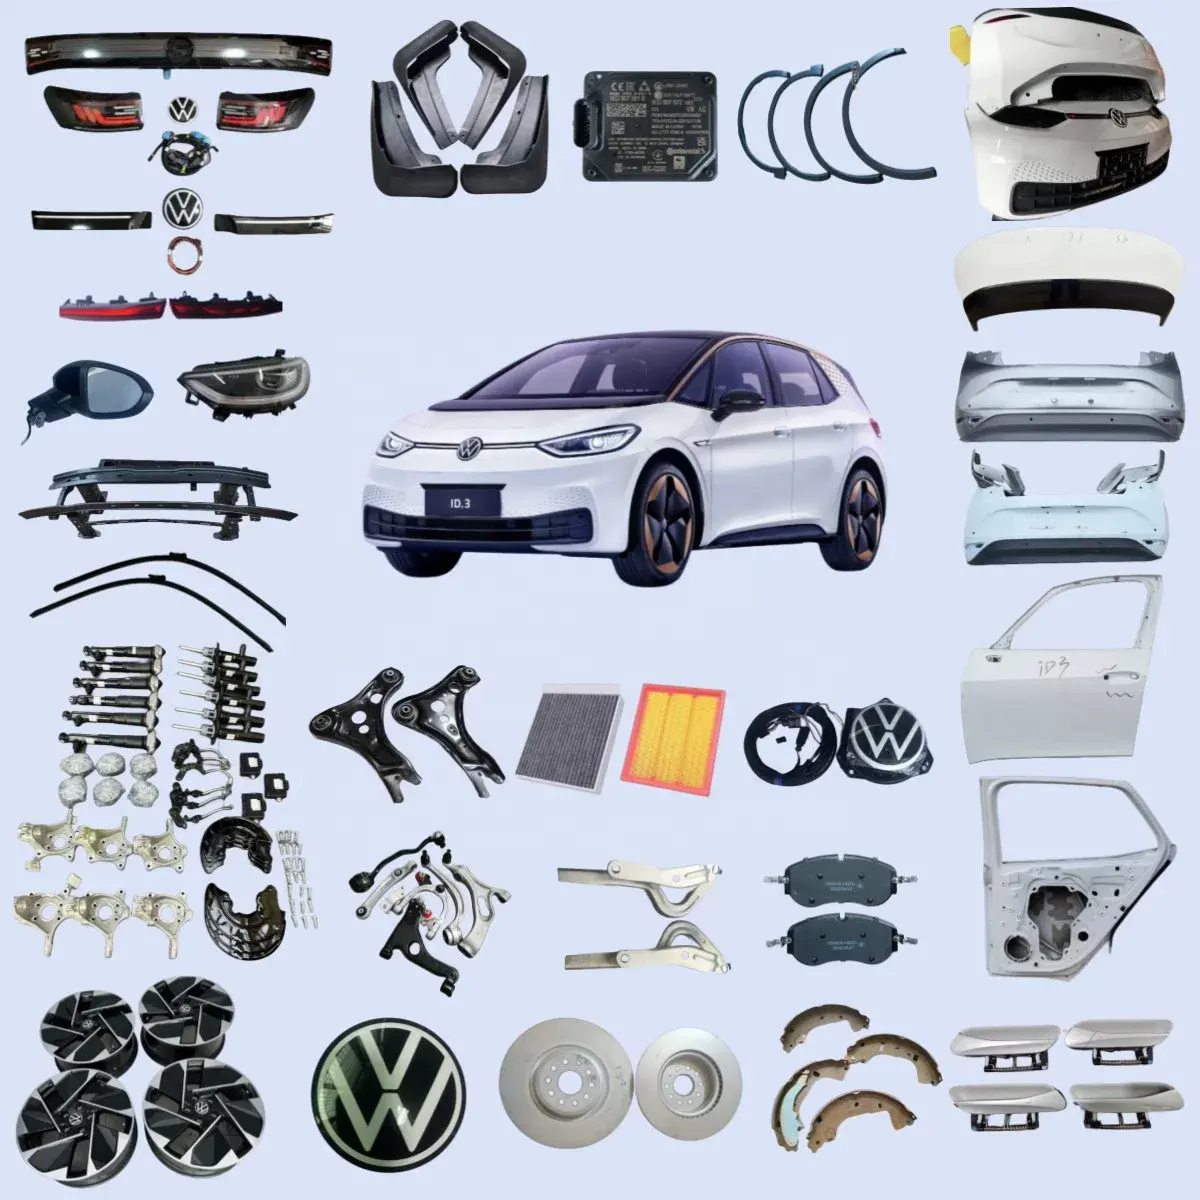 VW ID3 Original Auto Accessories Spoiler Oil Filter Body Kit Bumpers Headlight Door Car Spare Parts